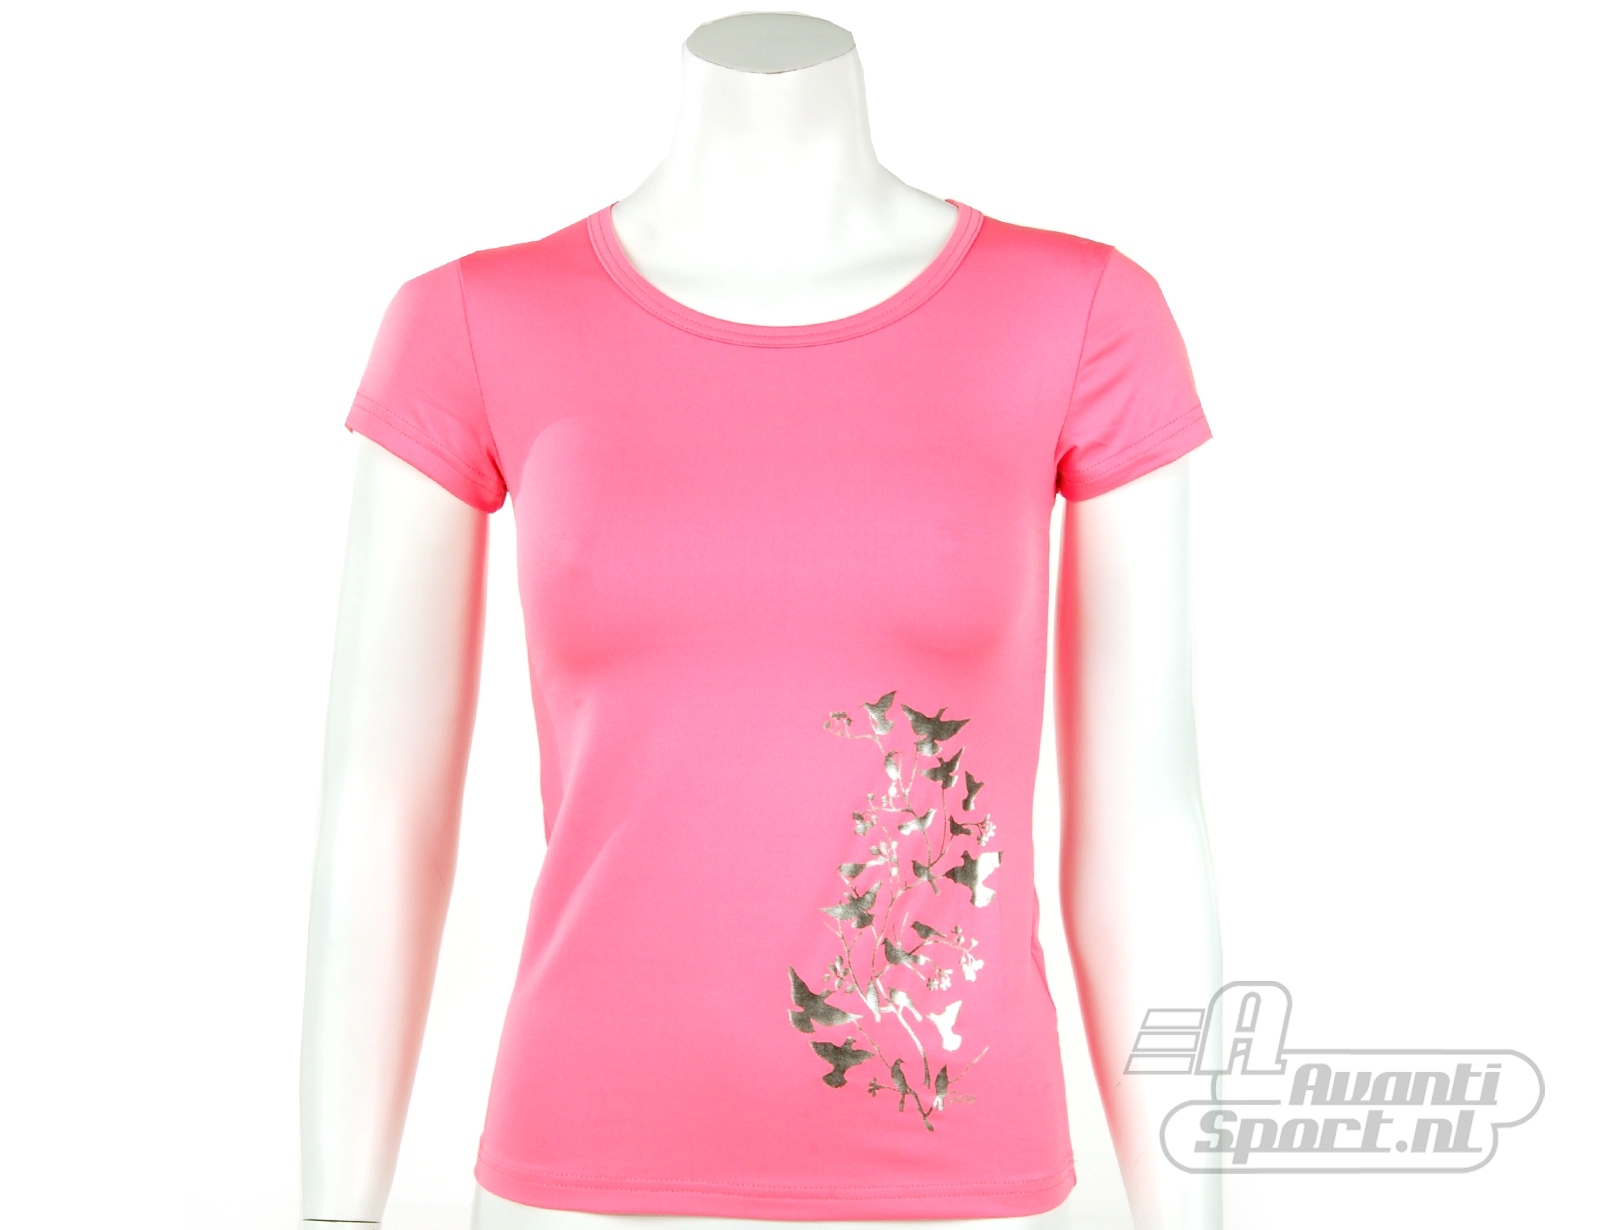 Avantisport - Cavello - Womens Tee Run - Cavello Aerobic Shirt